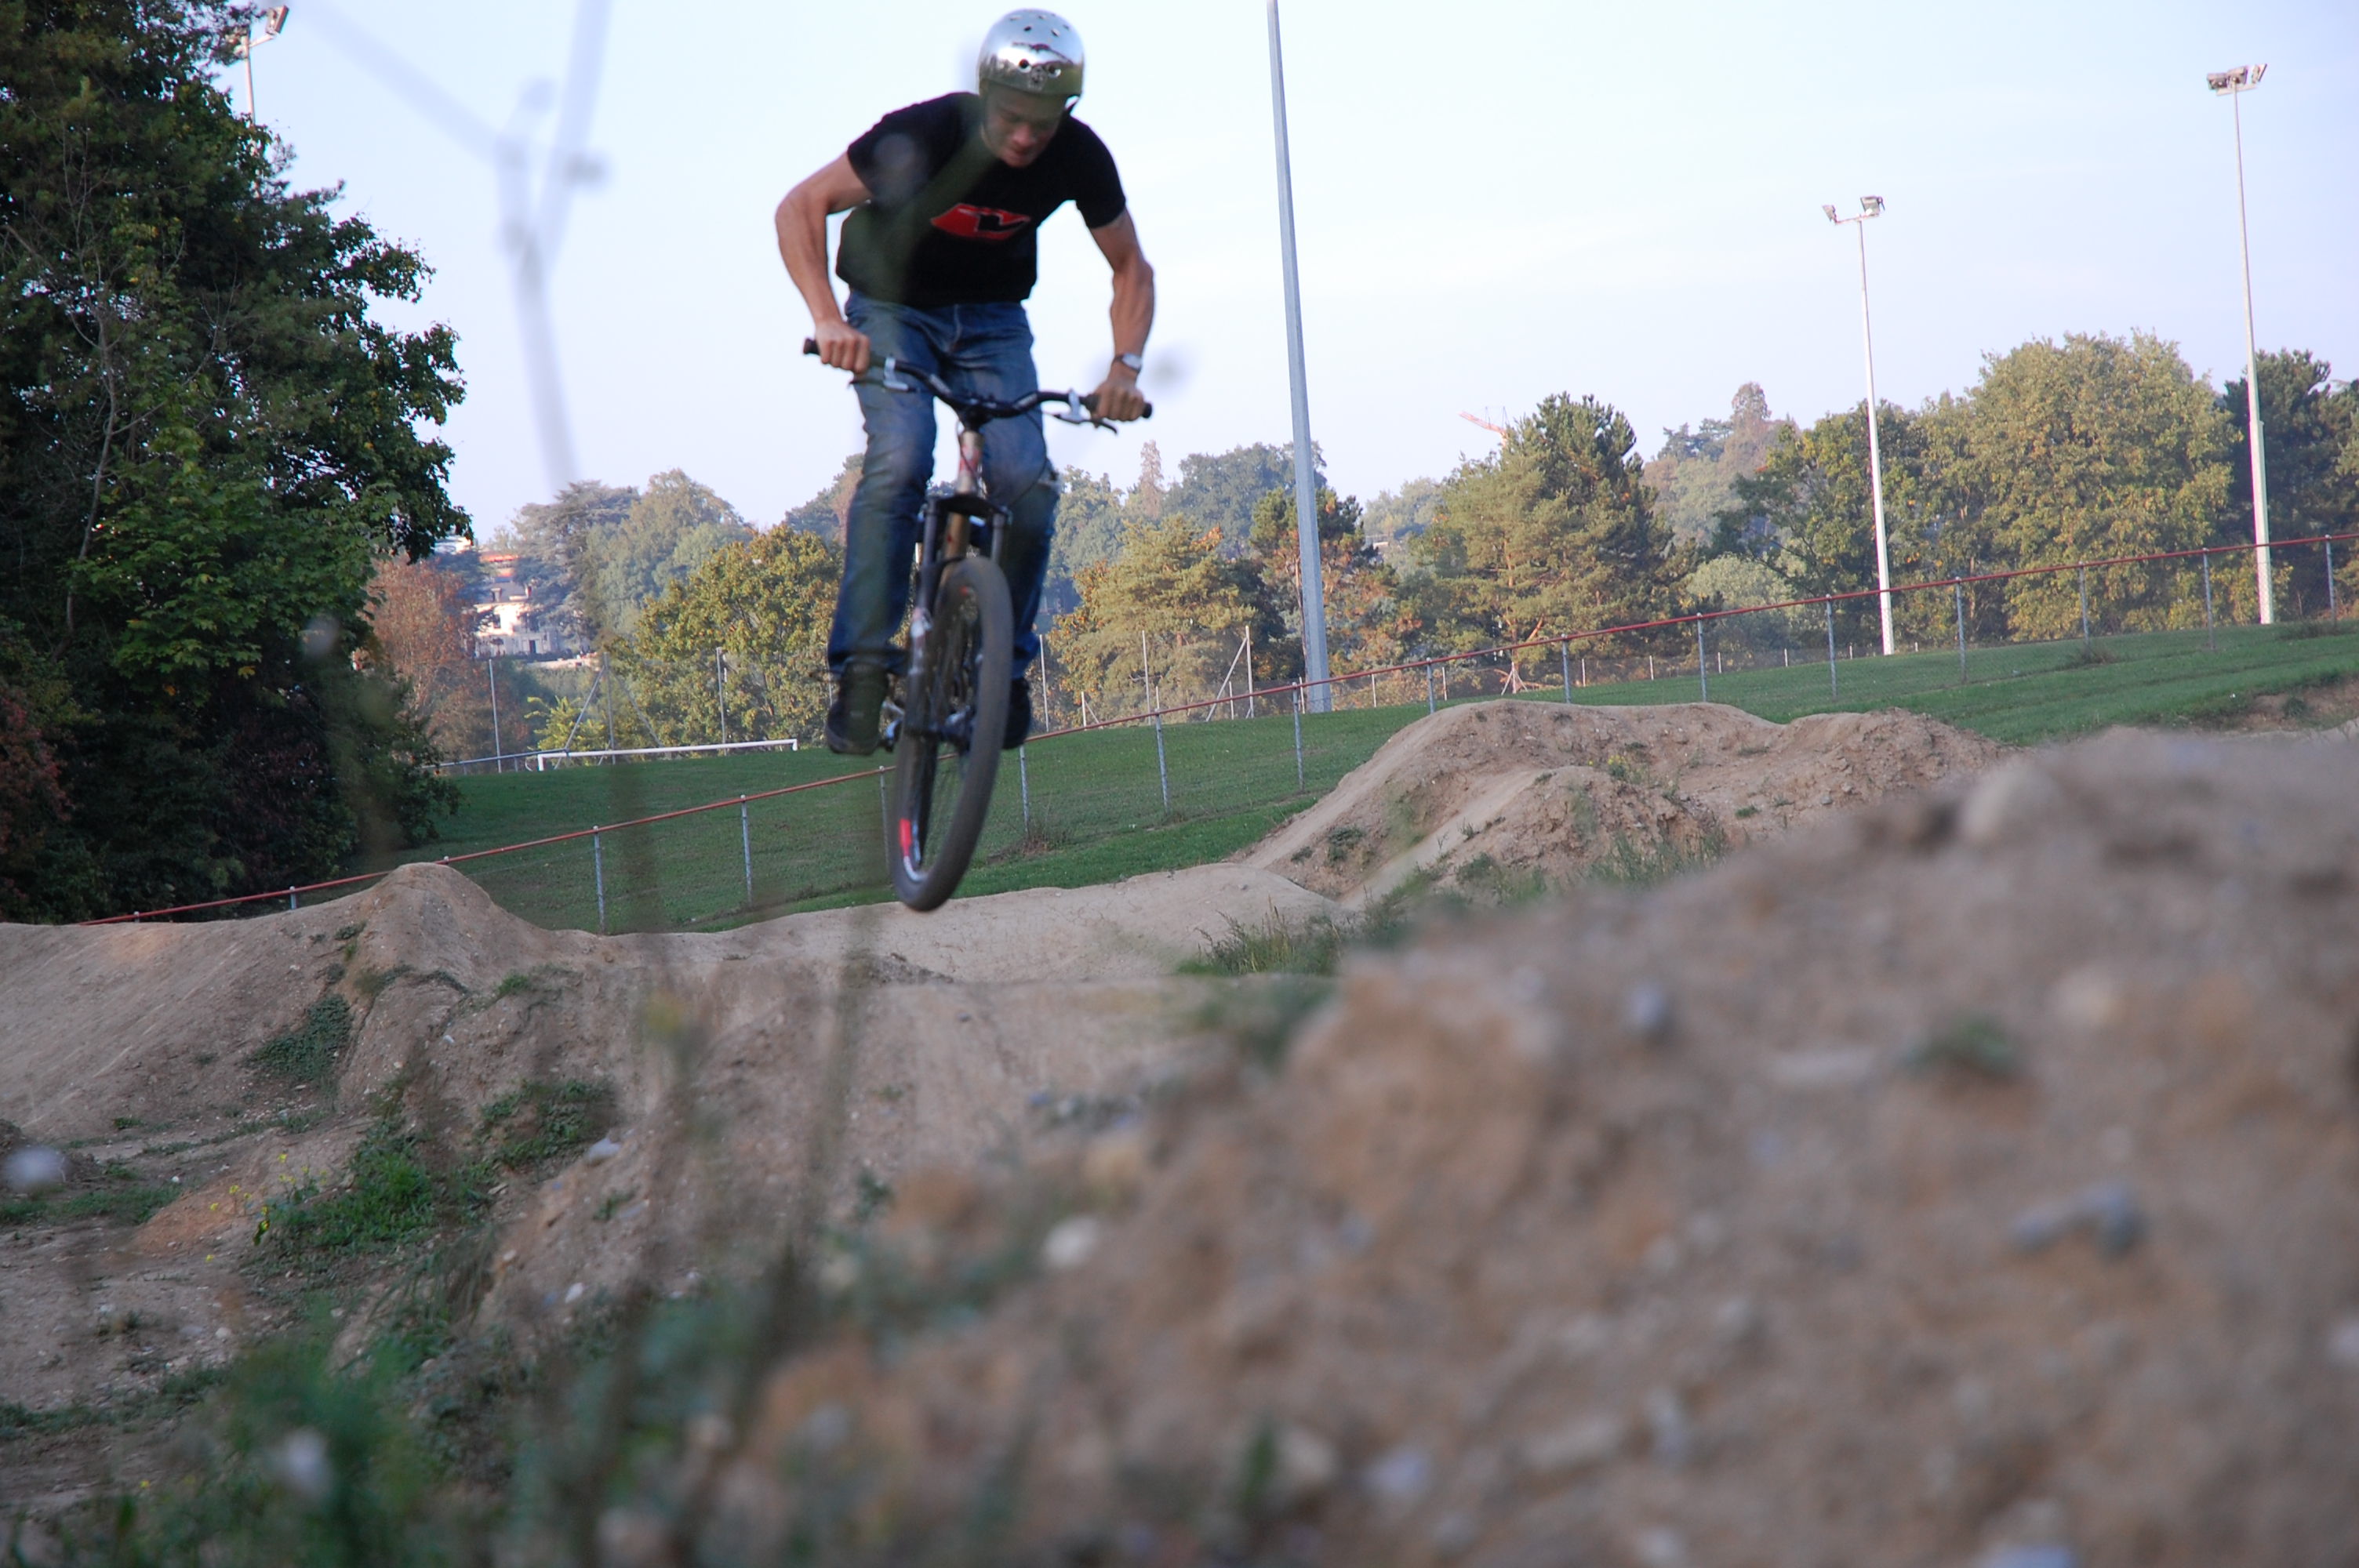 DIrt jump @ Vessy - Genève